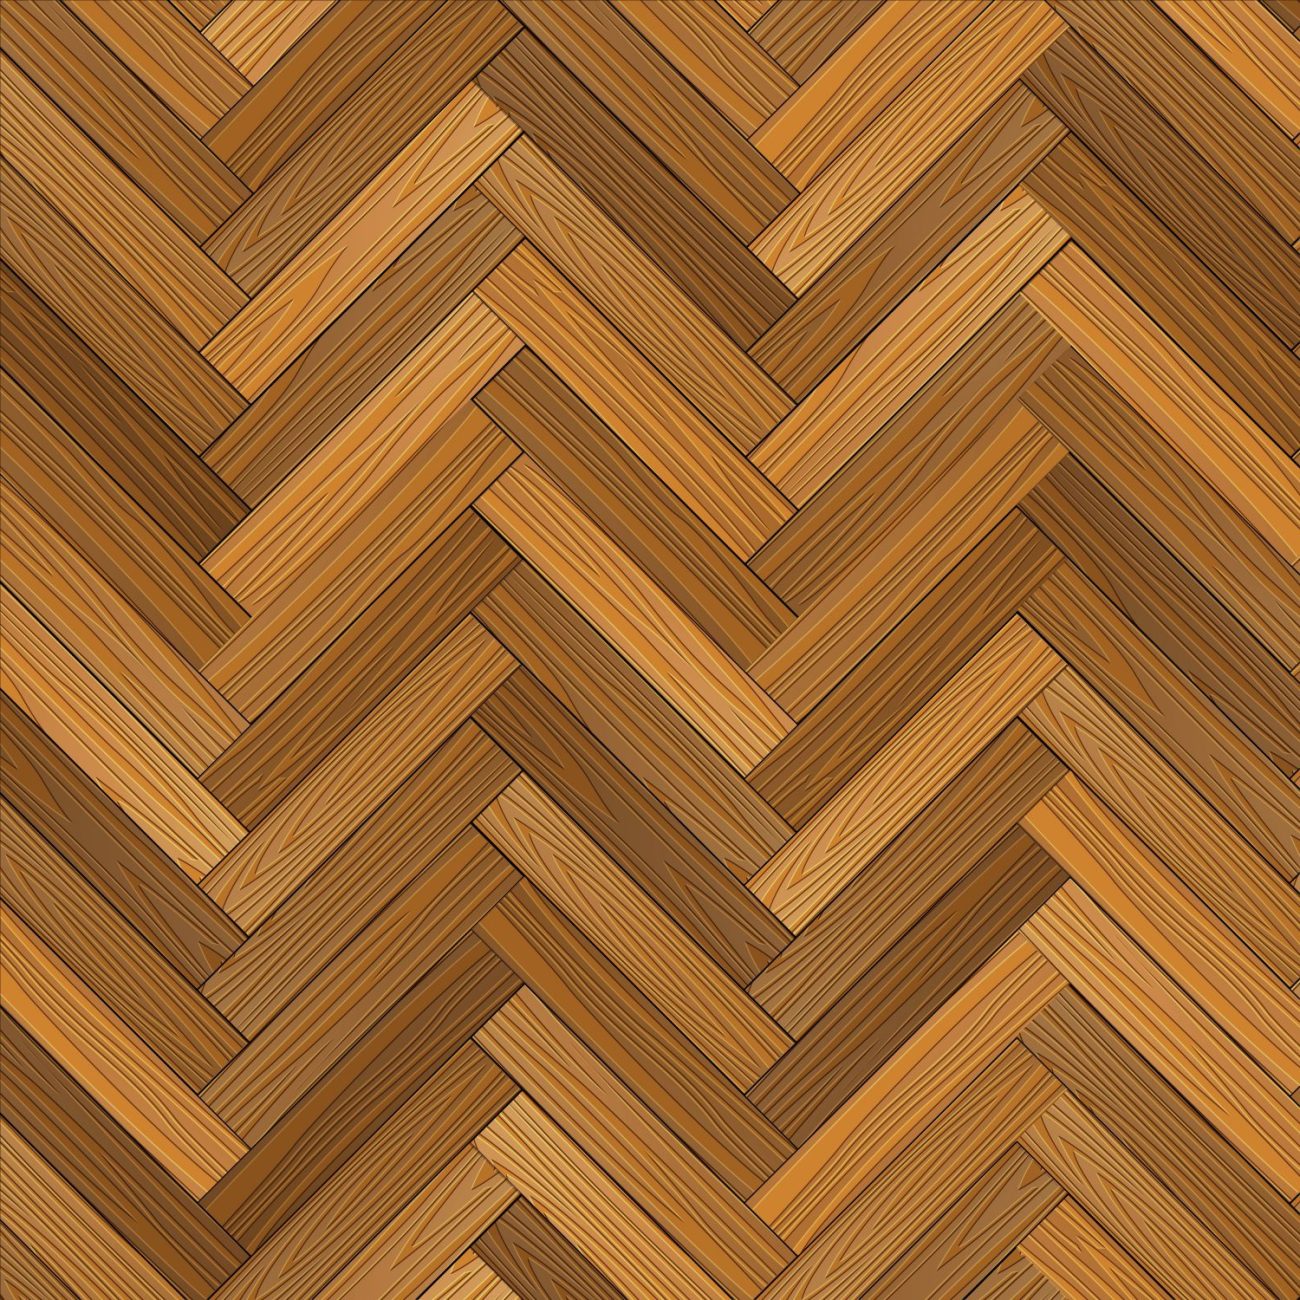 Hardwood Flooring Patterns, Hardwood Floor Patterns